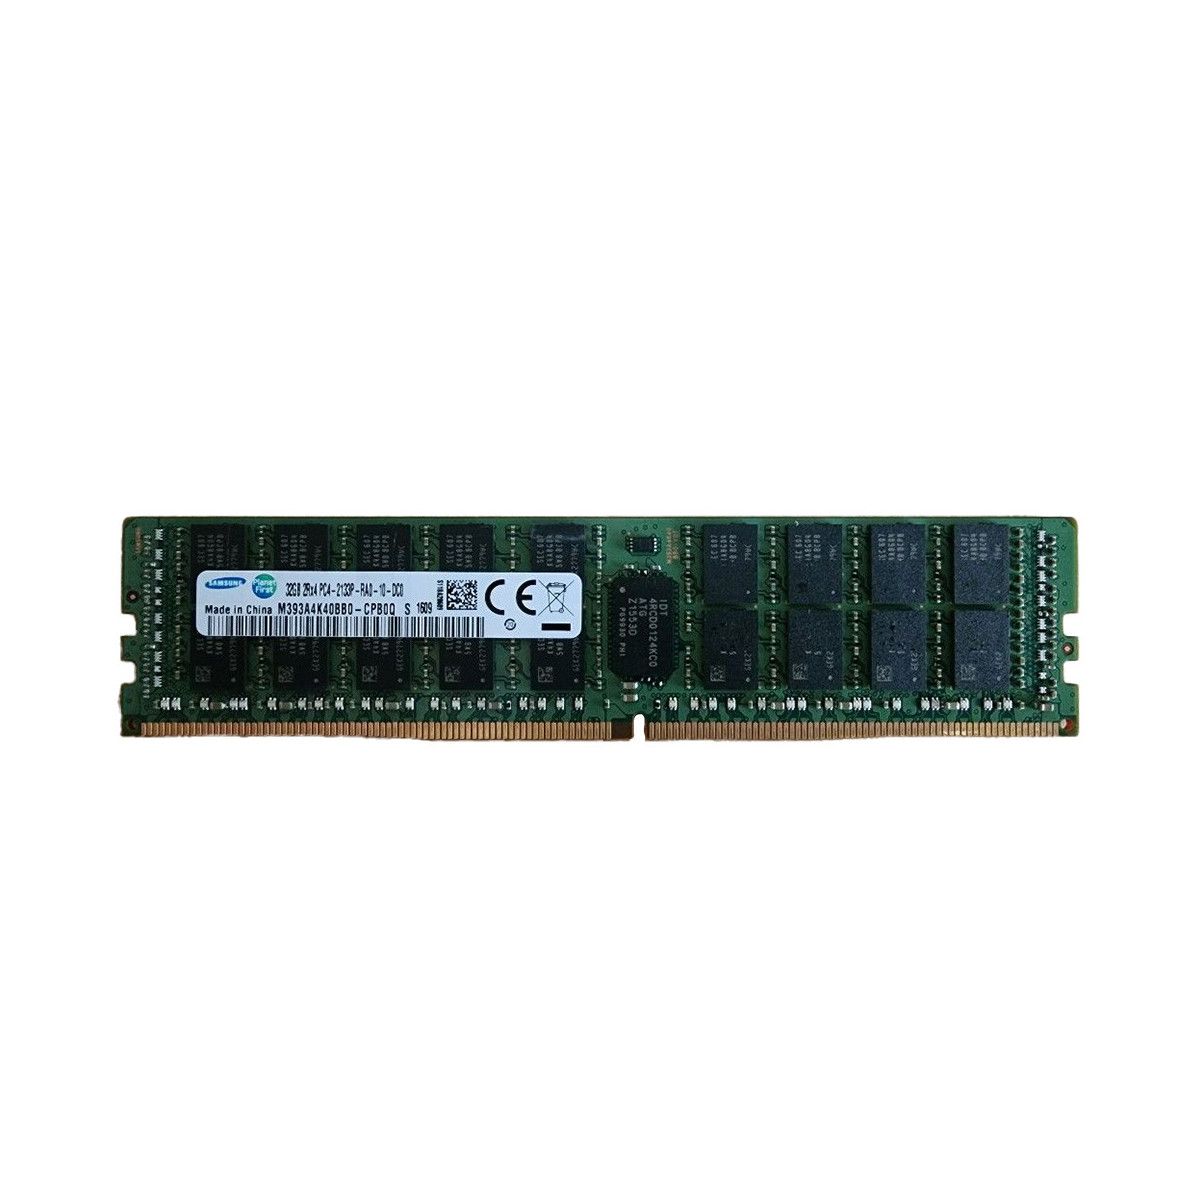 752370-091-MS - Memstar 1x 32GB DDR4-2133 RDIMM PC4-17000P-R - Mem-Star OEM compatibile Memoria 1 - Memstar 